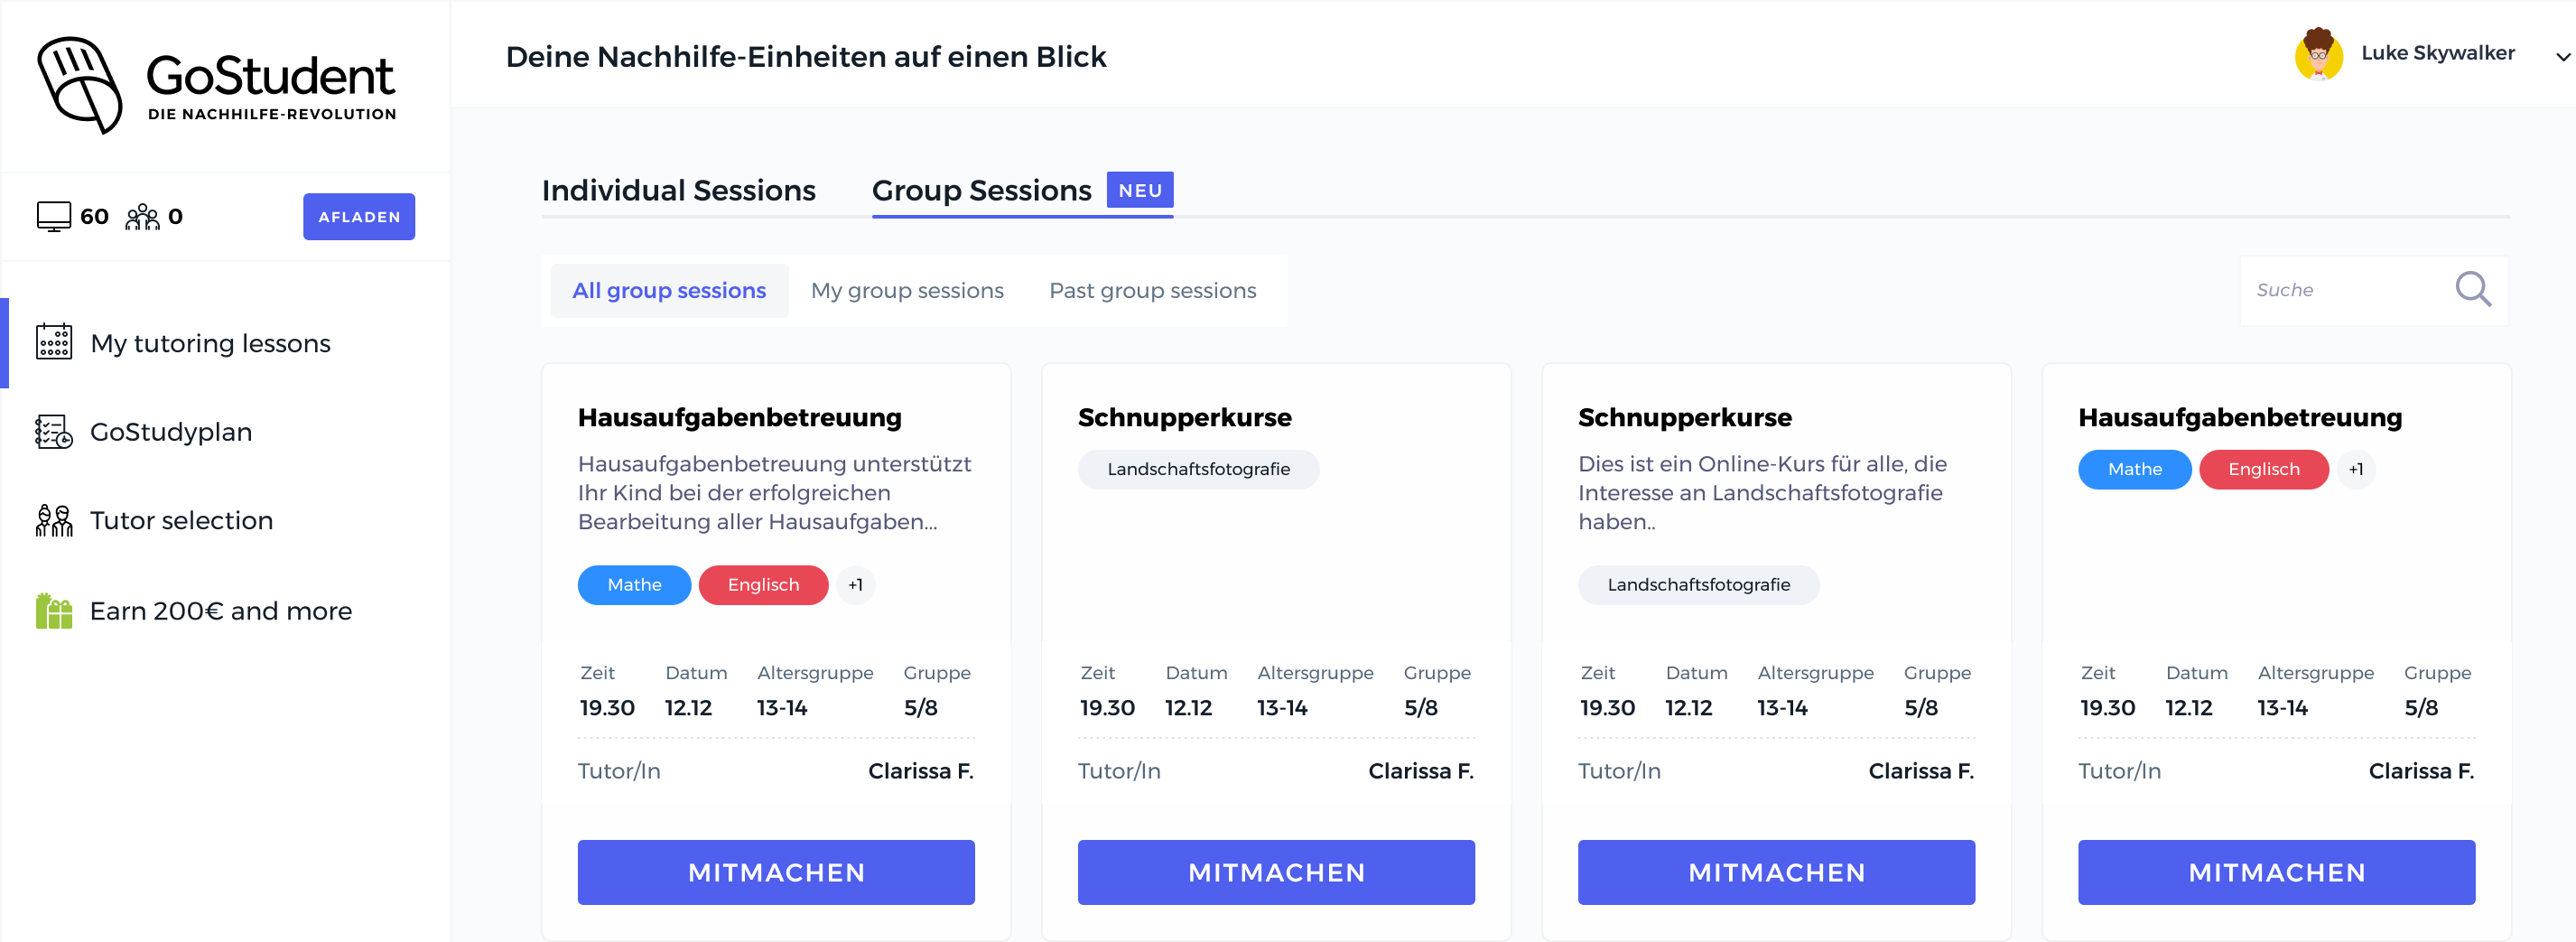 WebApp Update: wir testen Gruppenkurse & GoPremium!